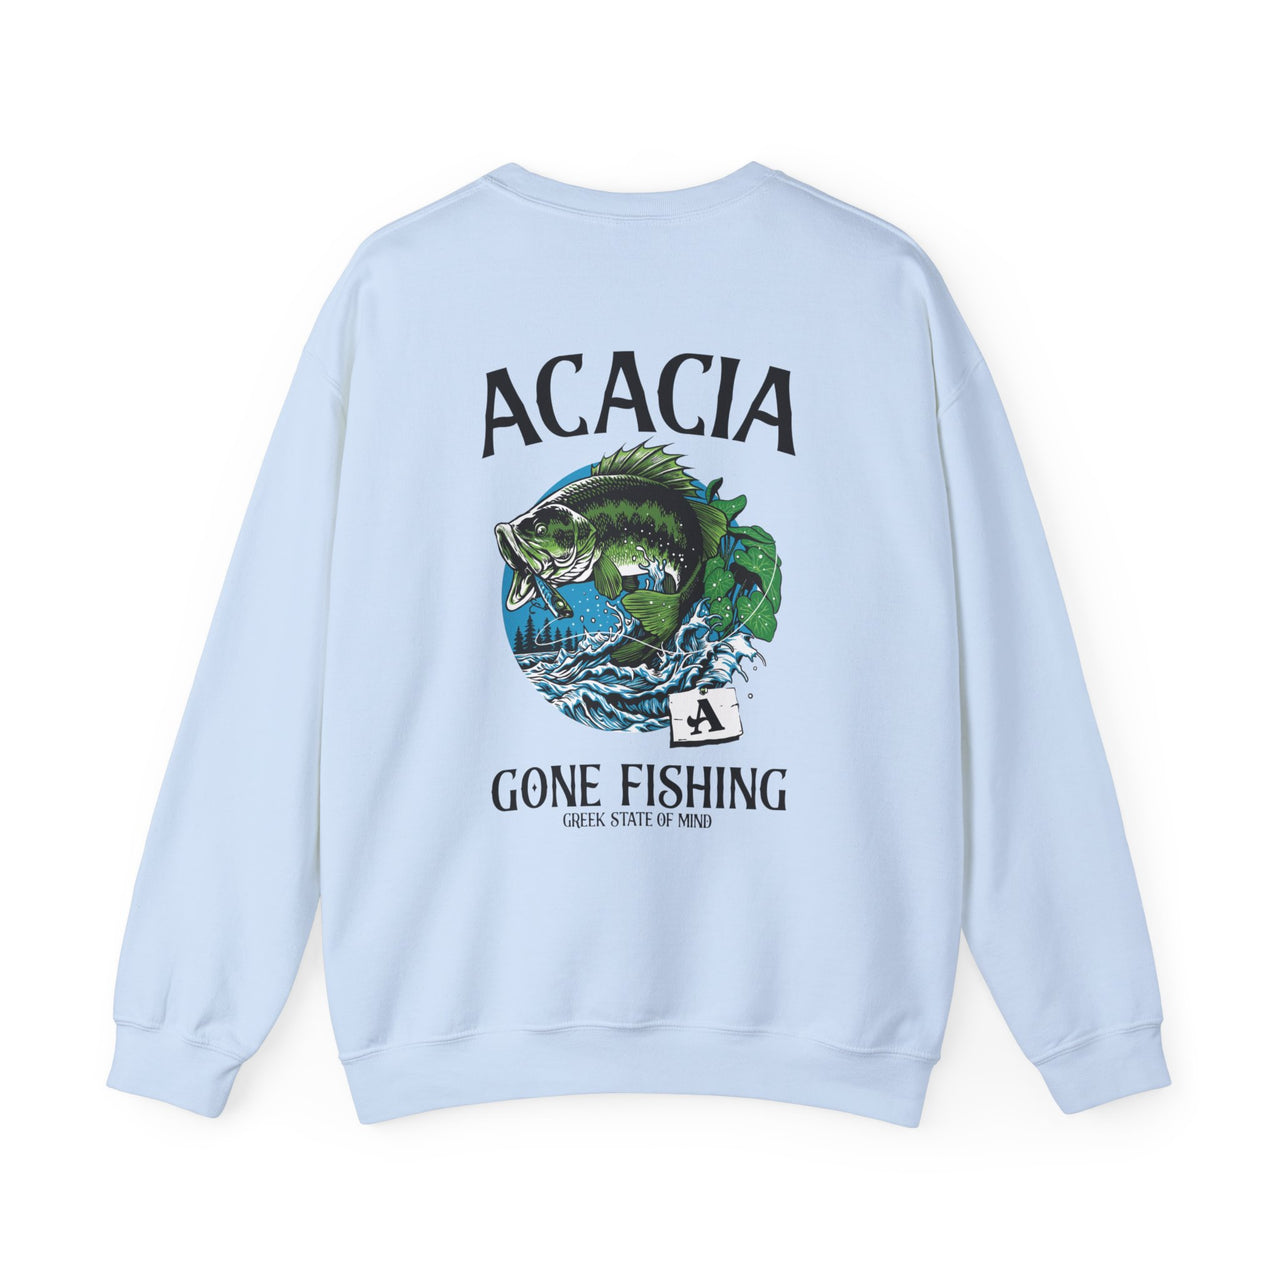 Acacia Graphic Crewneck Sweatshirt | Gone Fishing